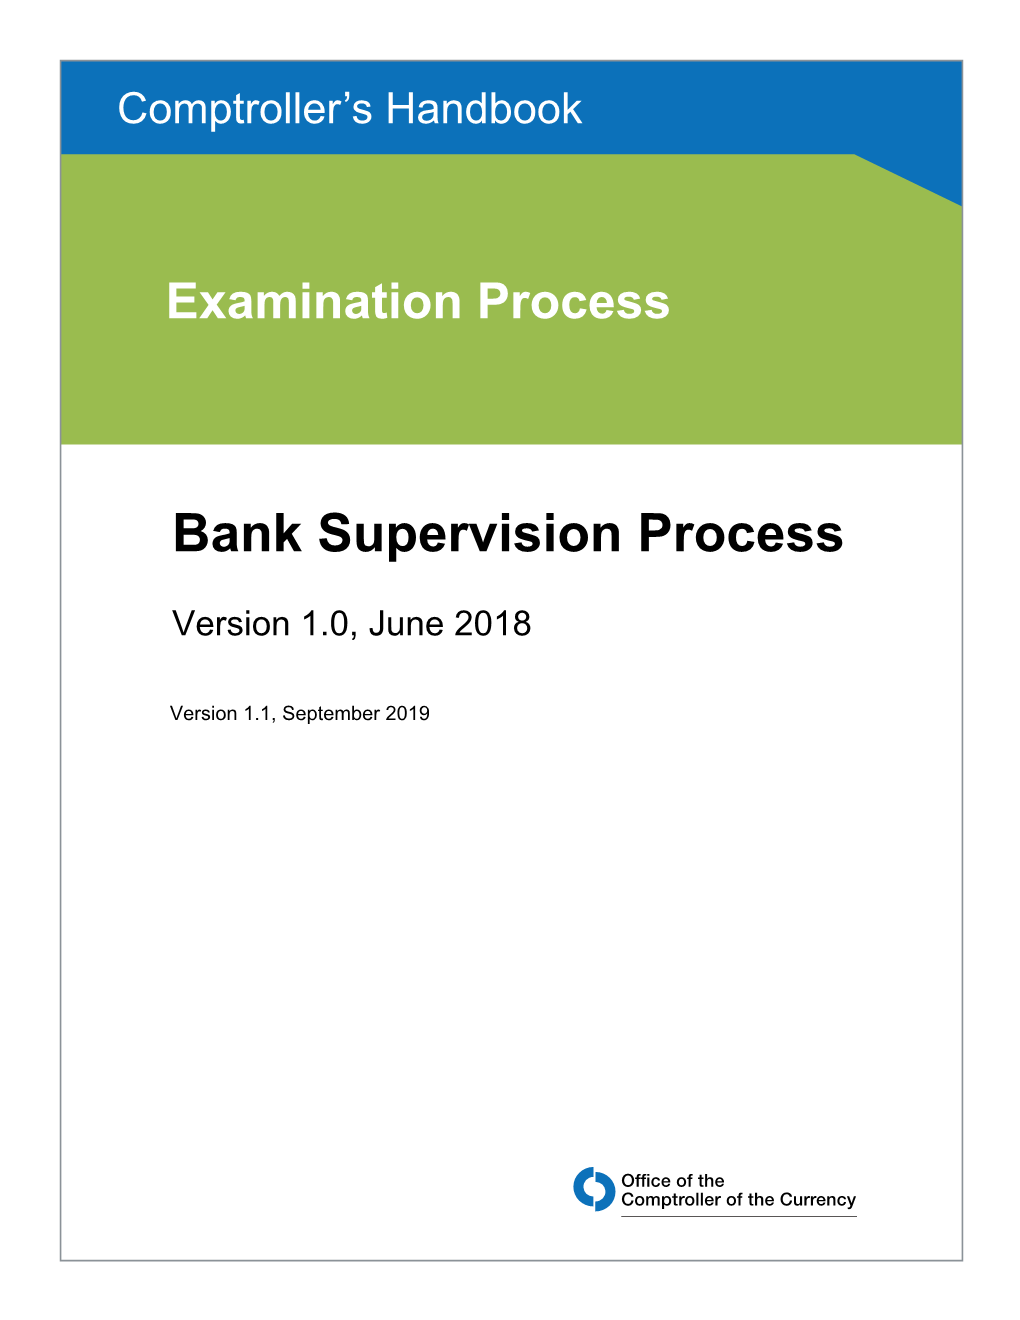 Bank Supervision Process, Comptroller's Handbook